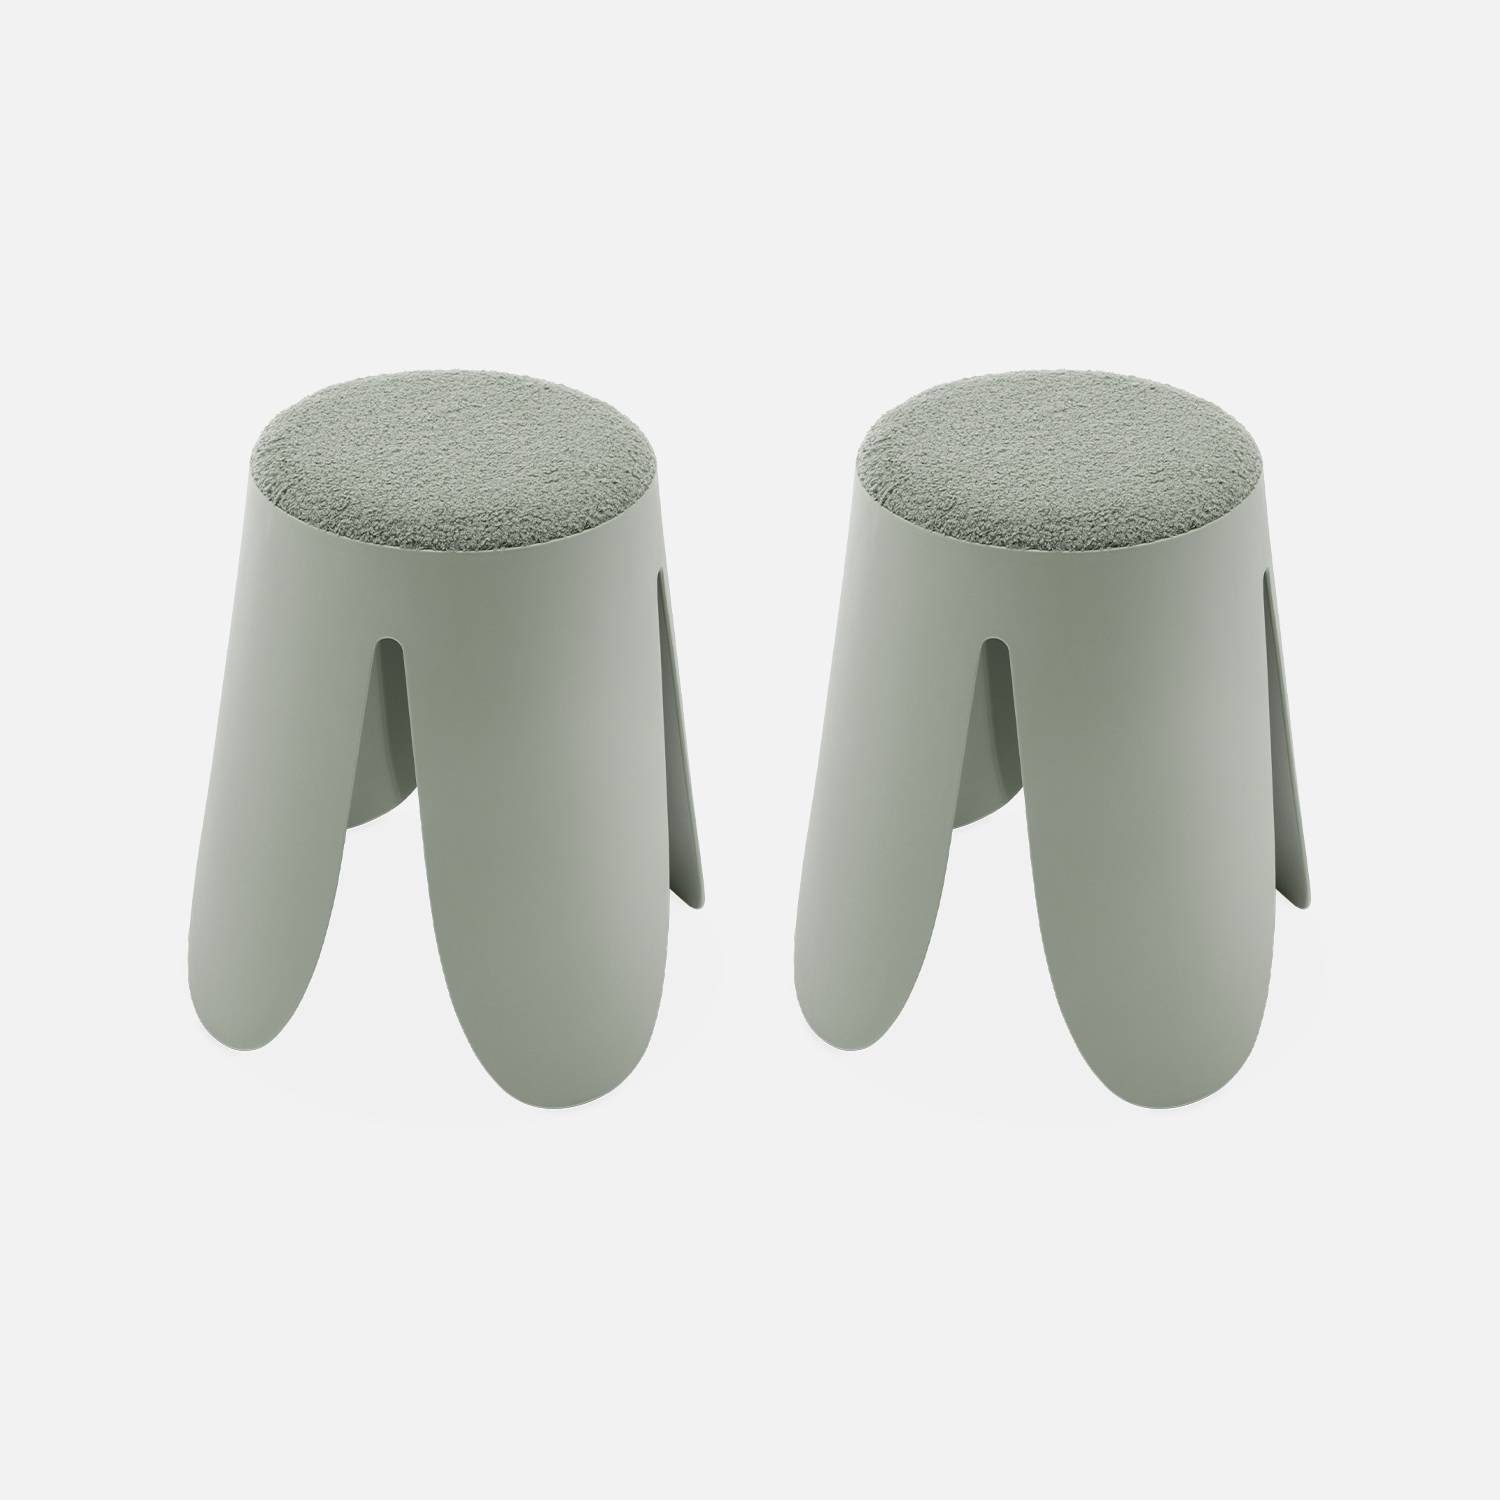  Conjunto de 2 taburetes apilables, asiento texturadoa | sweeek